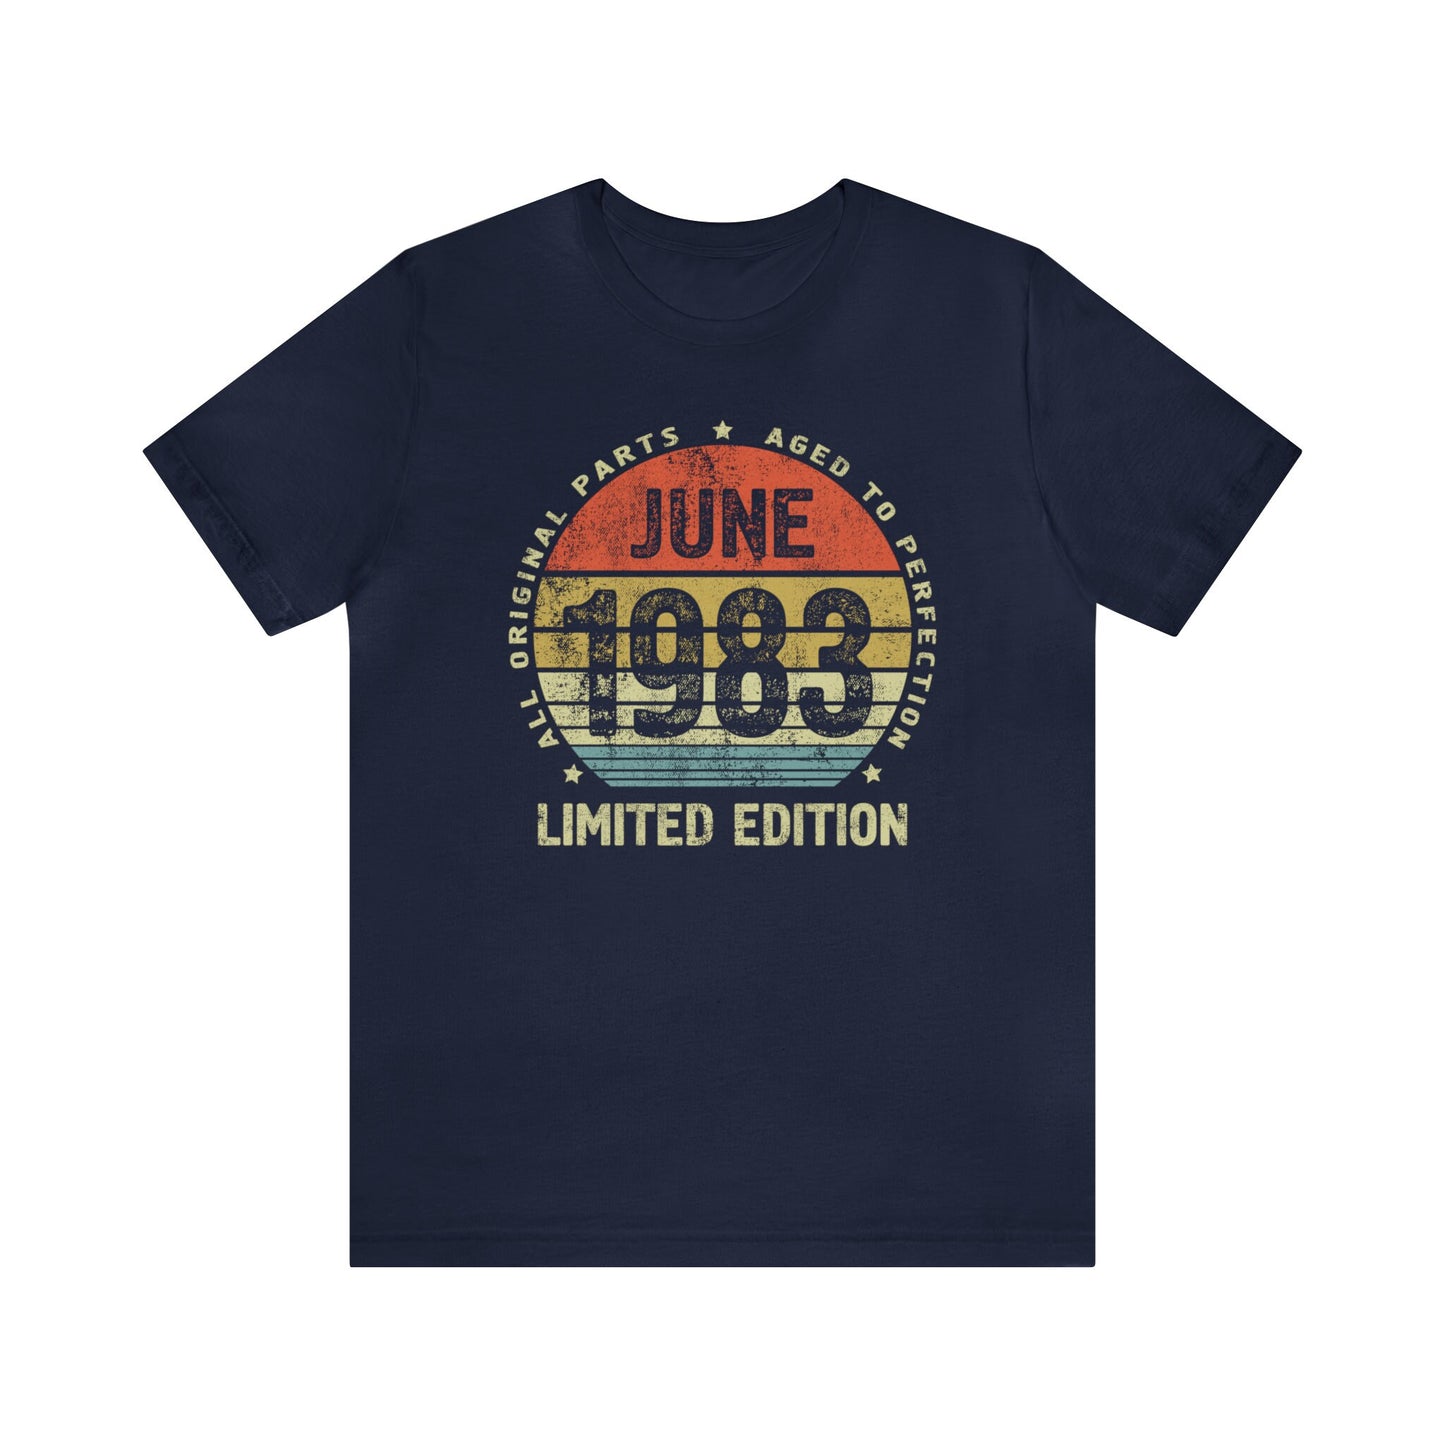 June 1983 birthday gift shirt for women or men, T-shirt for sister or brother